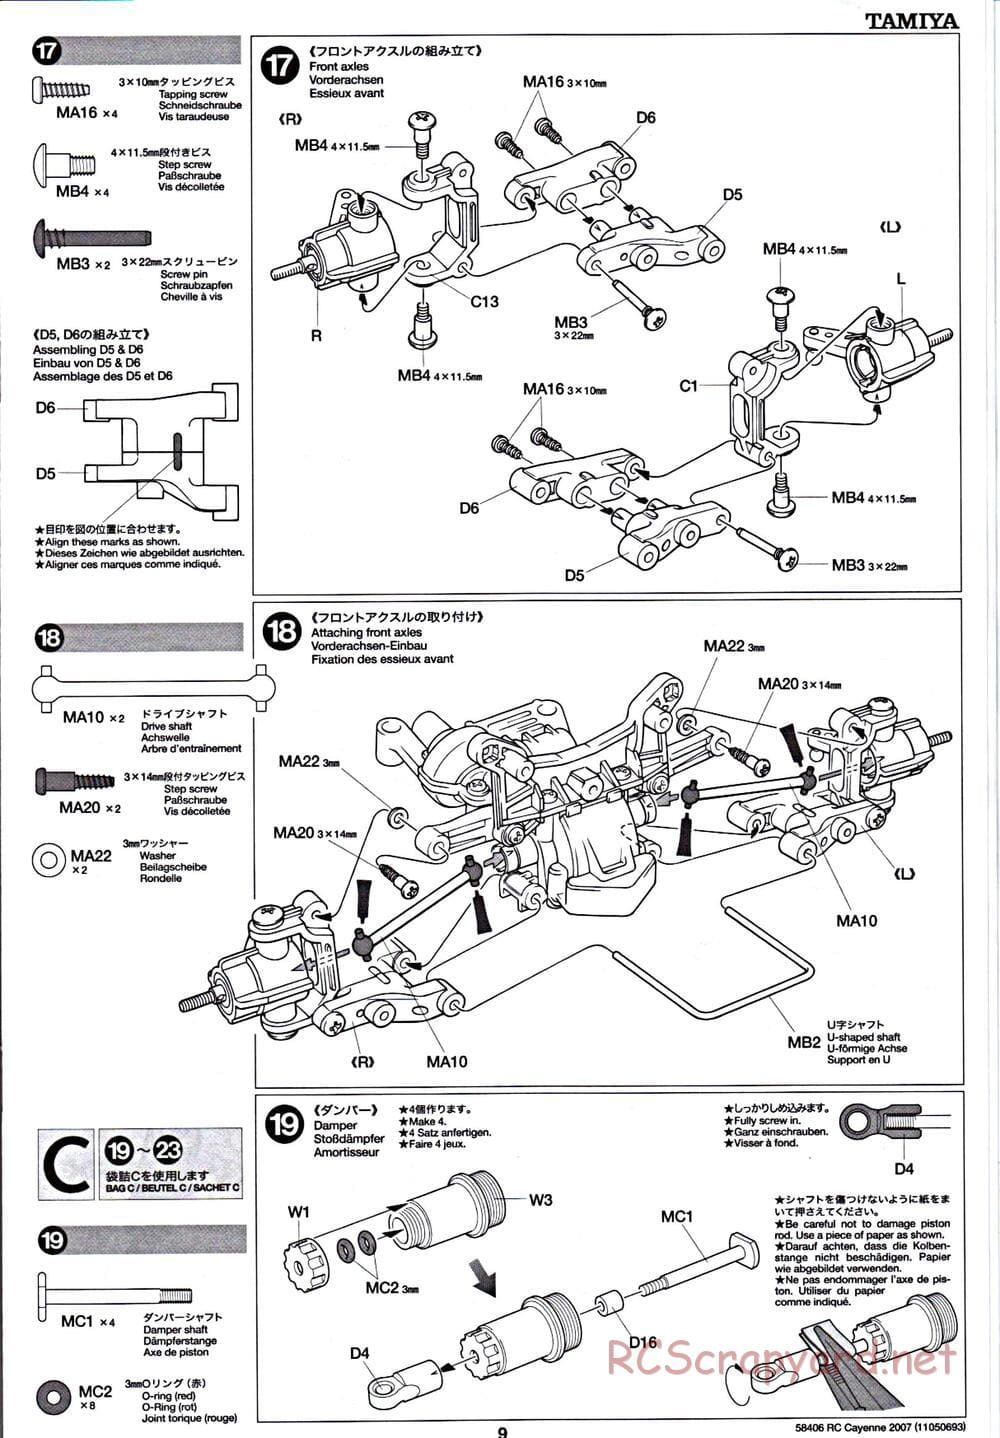 Tamiya - Cayenne S Transsyberia 2007 Chassis - Manual - Page 9